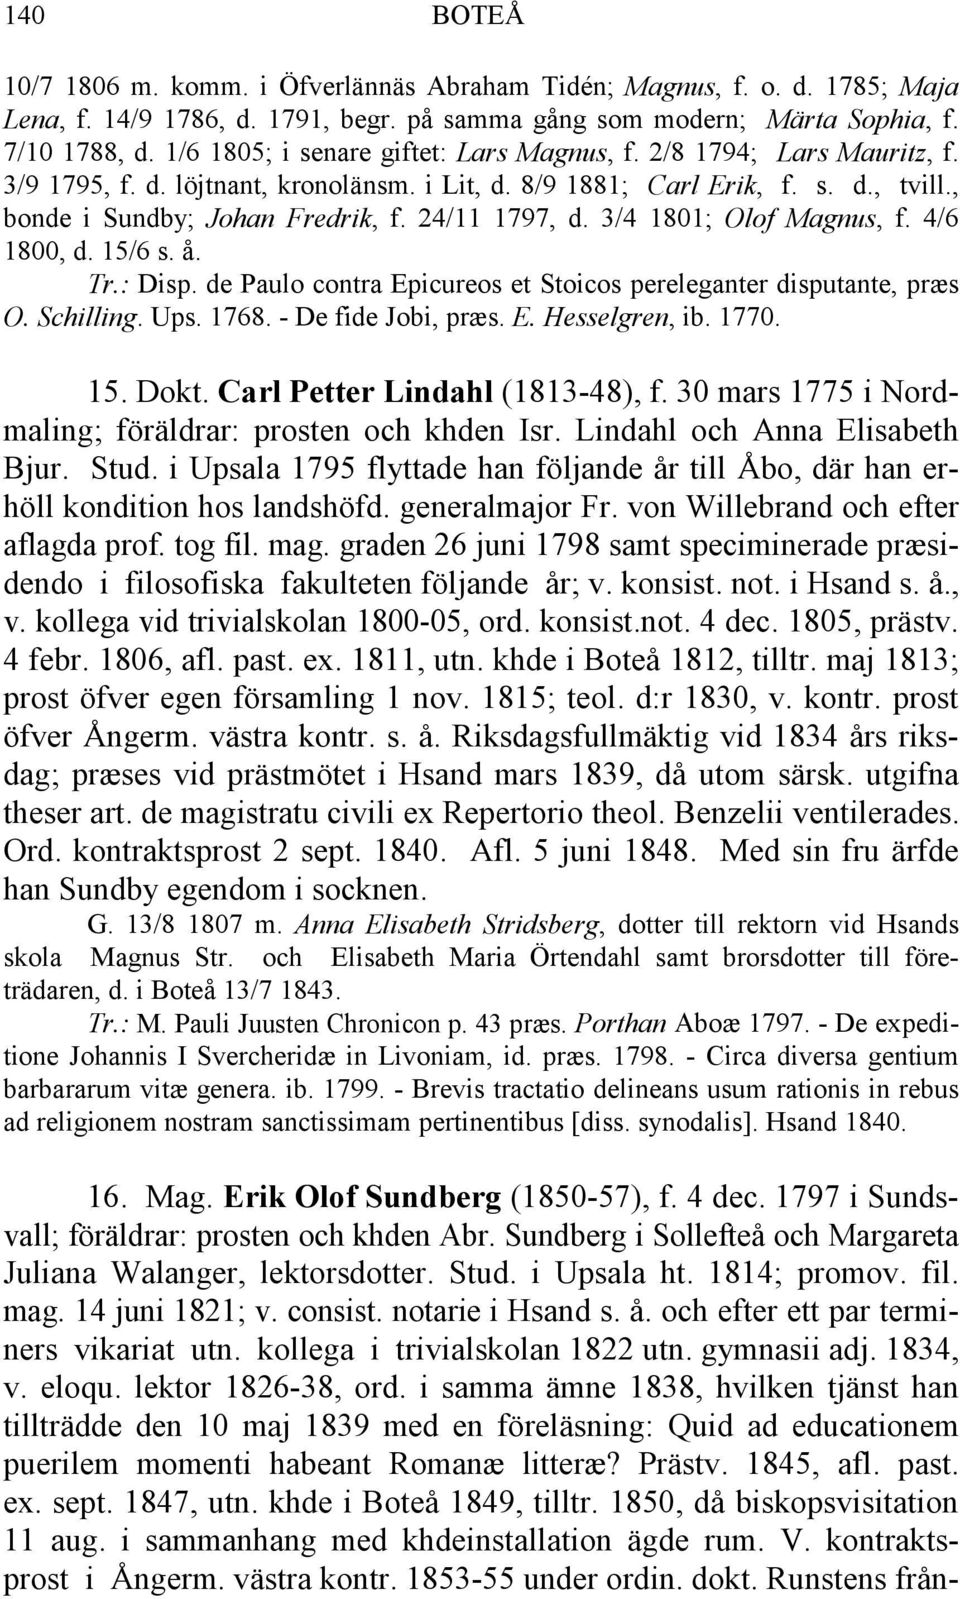 24/11 1797, d. 3/4 1801; Olof Magnus, f. 4/6 1800, d. 15/6 s. å. Tr.: Disp. de Paulo contra Epicureos et Stoicos pereleganter disputante, præs O. Schilling. Ups. 1768. - De fide Jobi, præs. E. Hesselgren, ib.